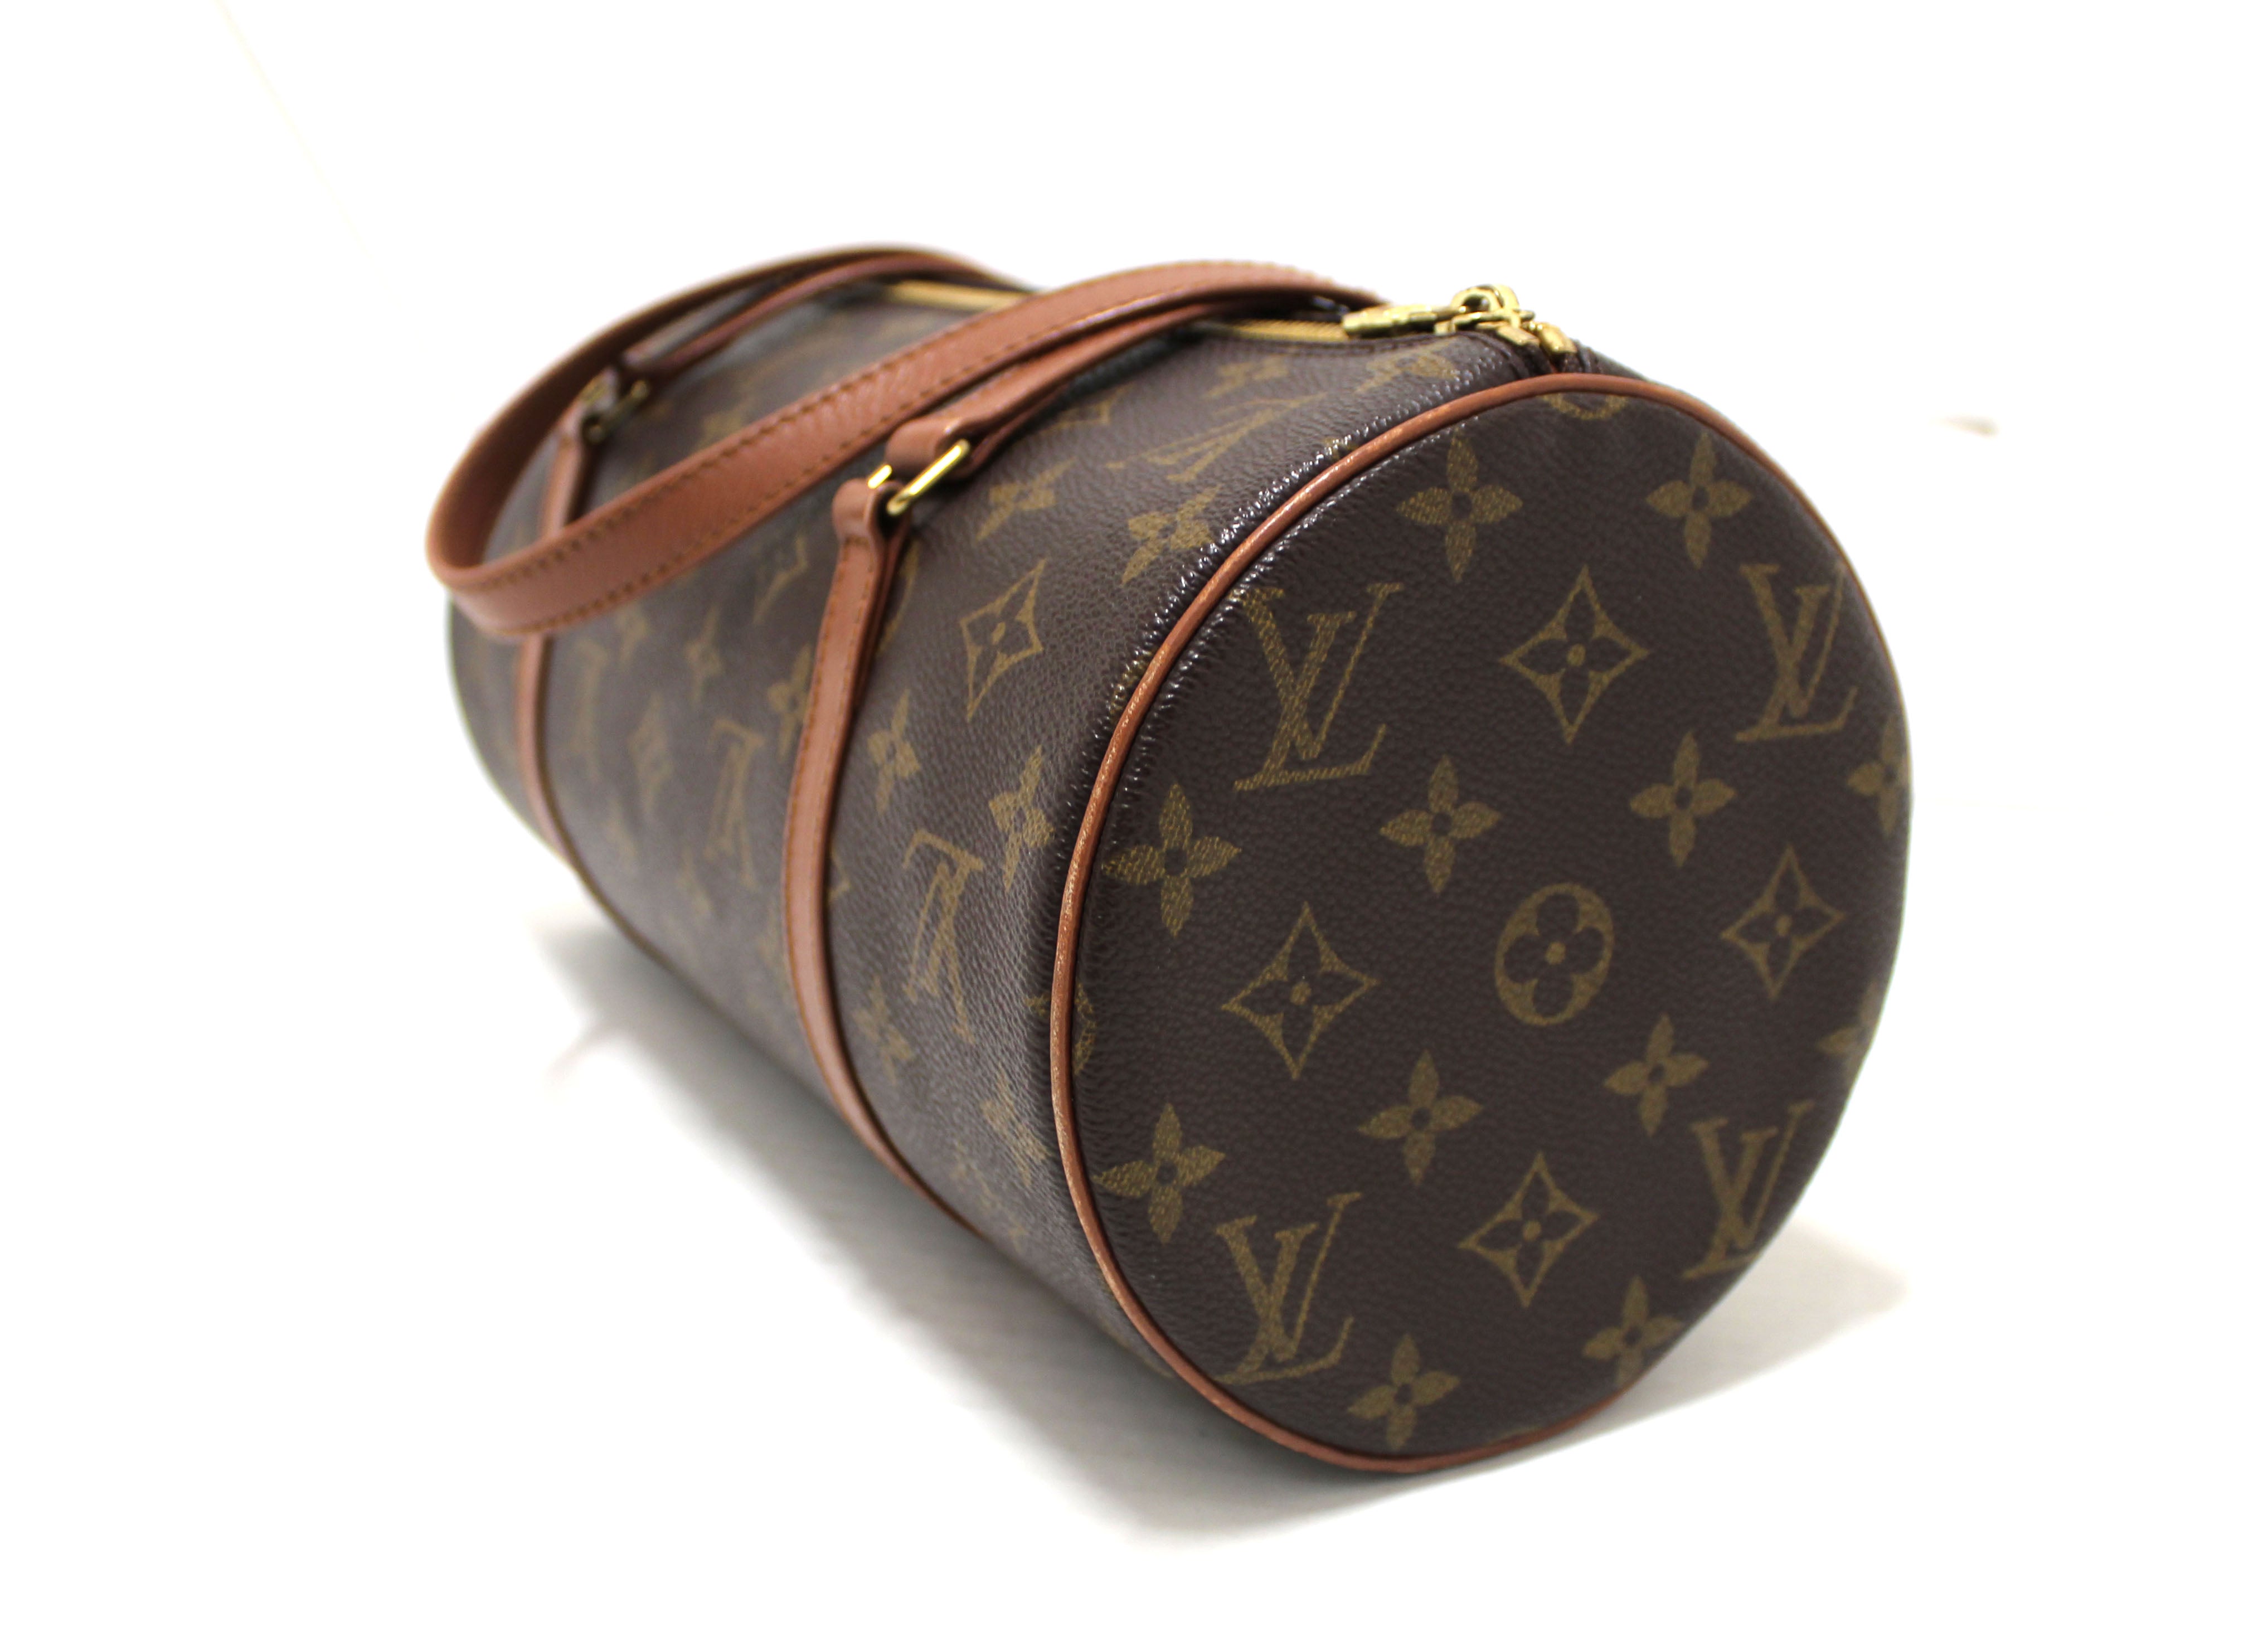 Louis Vuitton Classic Monogram Papillon 30 Handbag